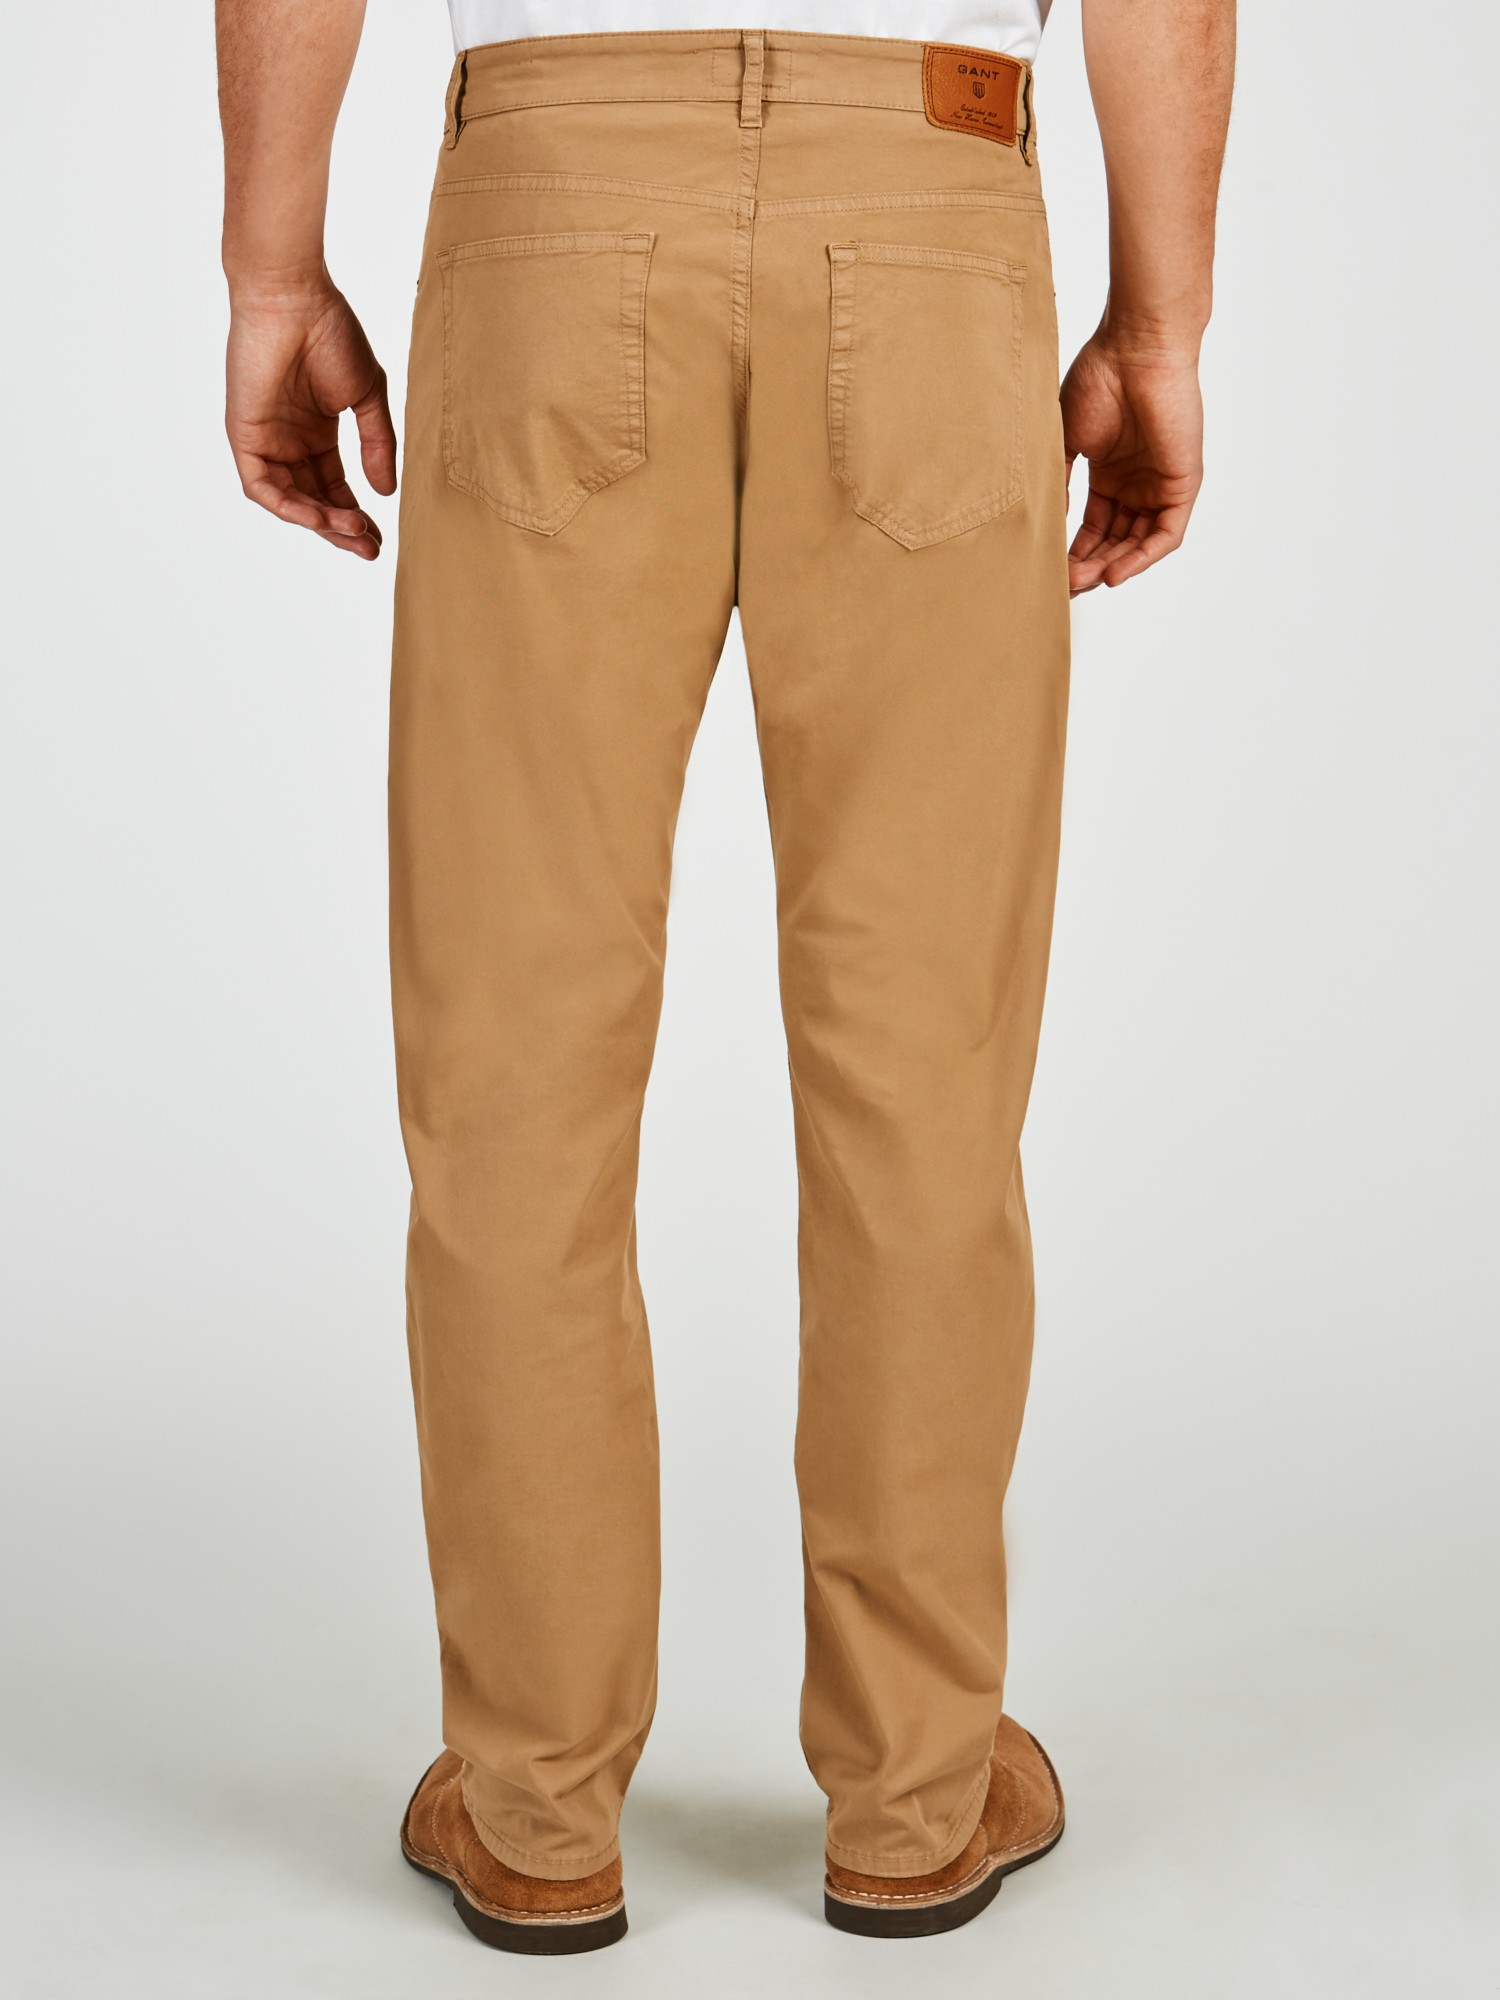 GANT Jason Comfort Fit Cotton Poplin Trousers in Brown for Men - Lyst